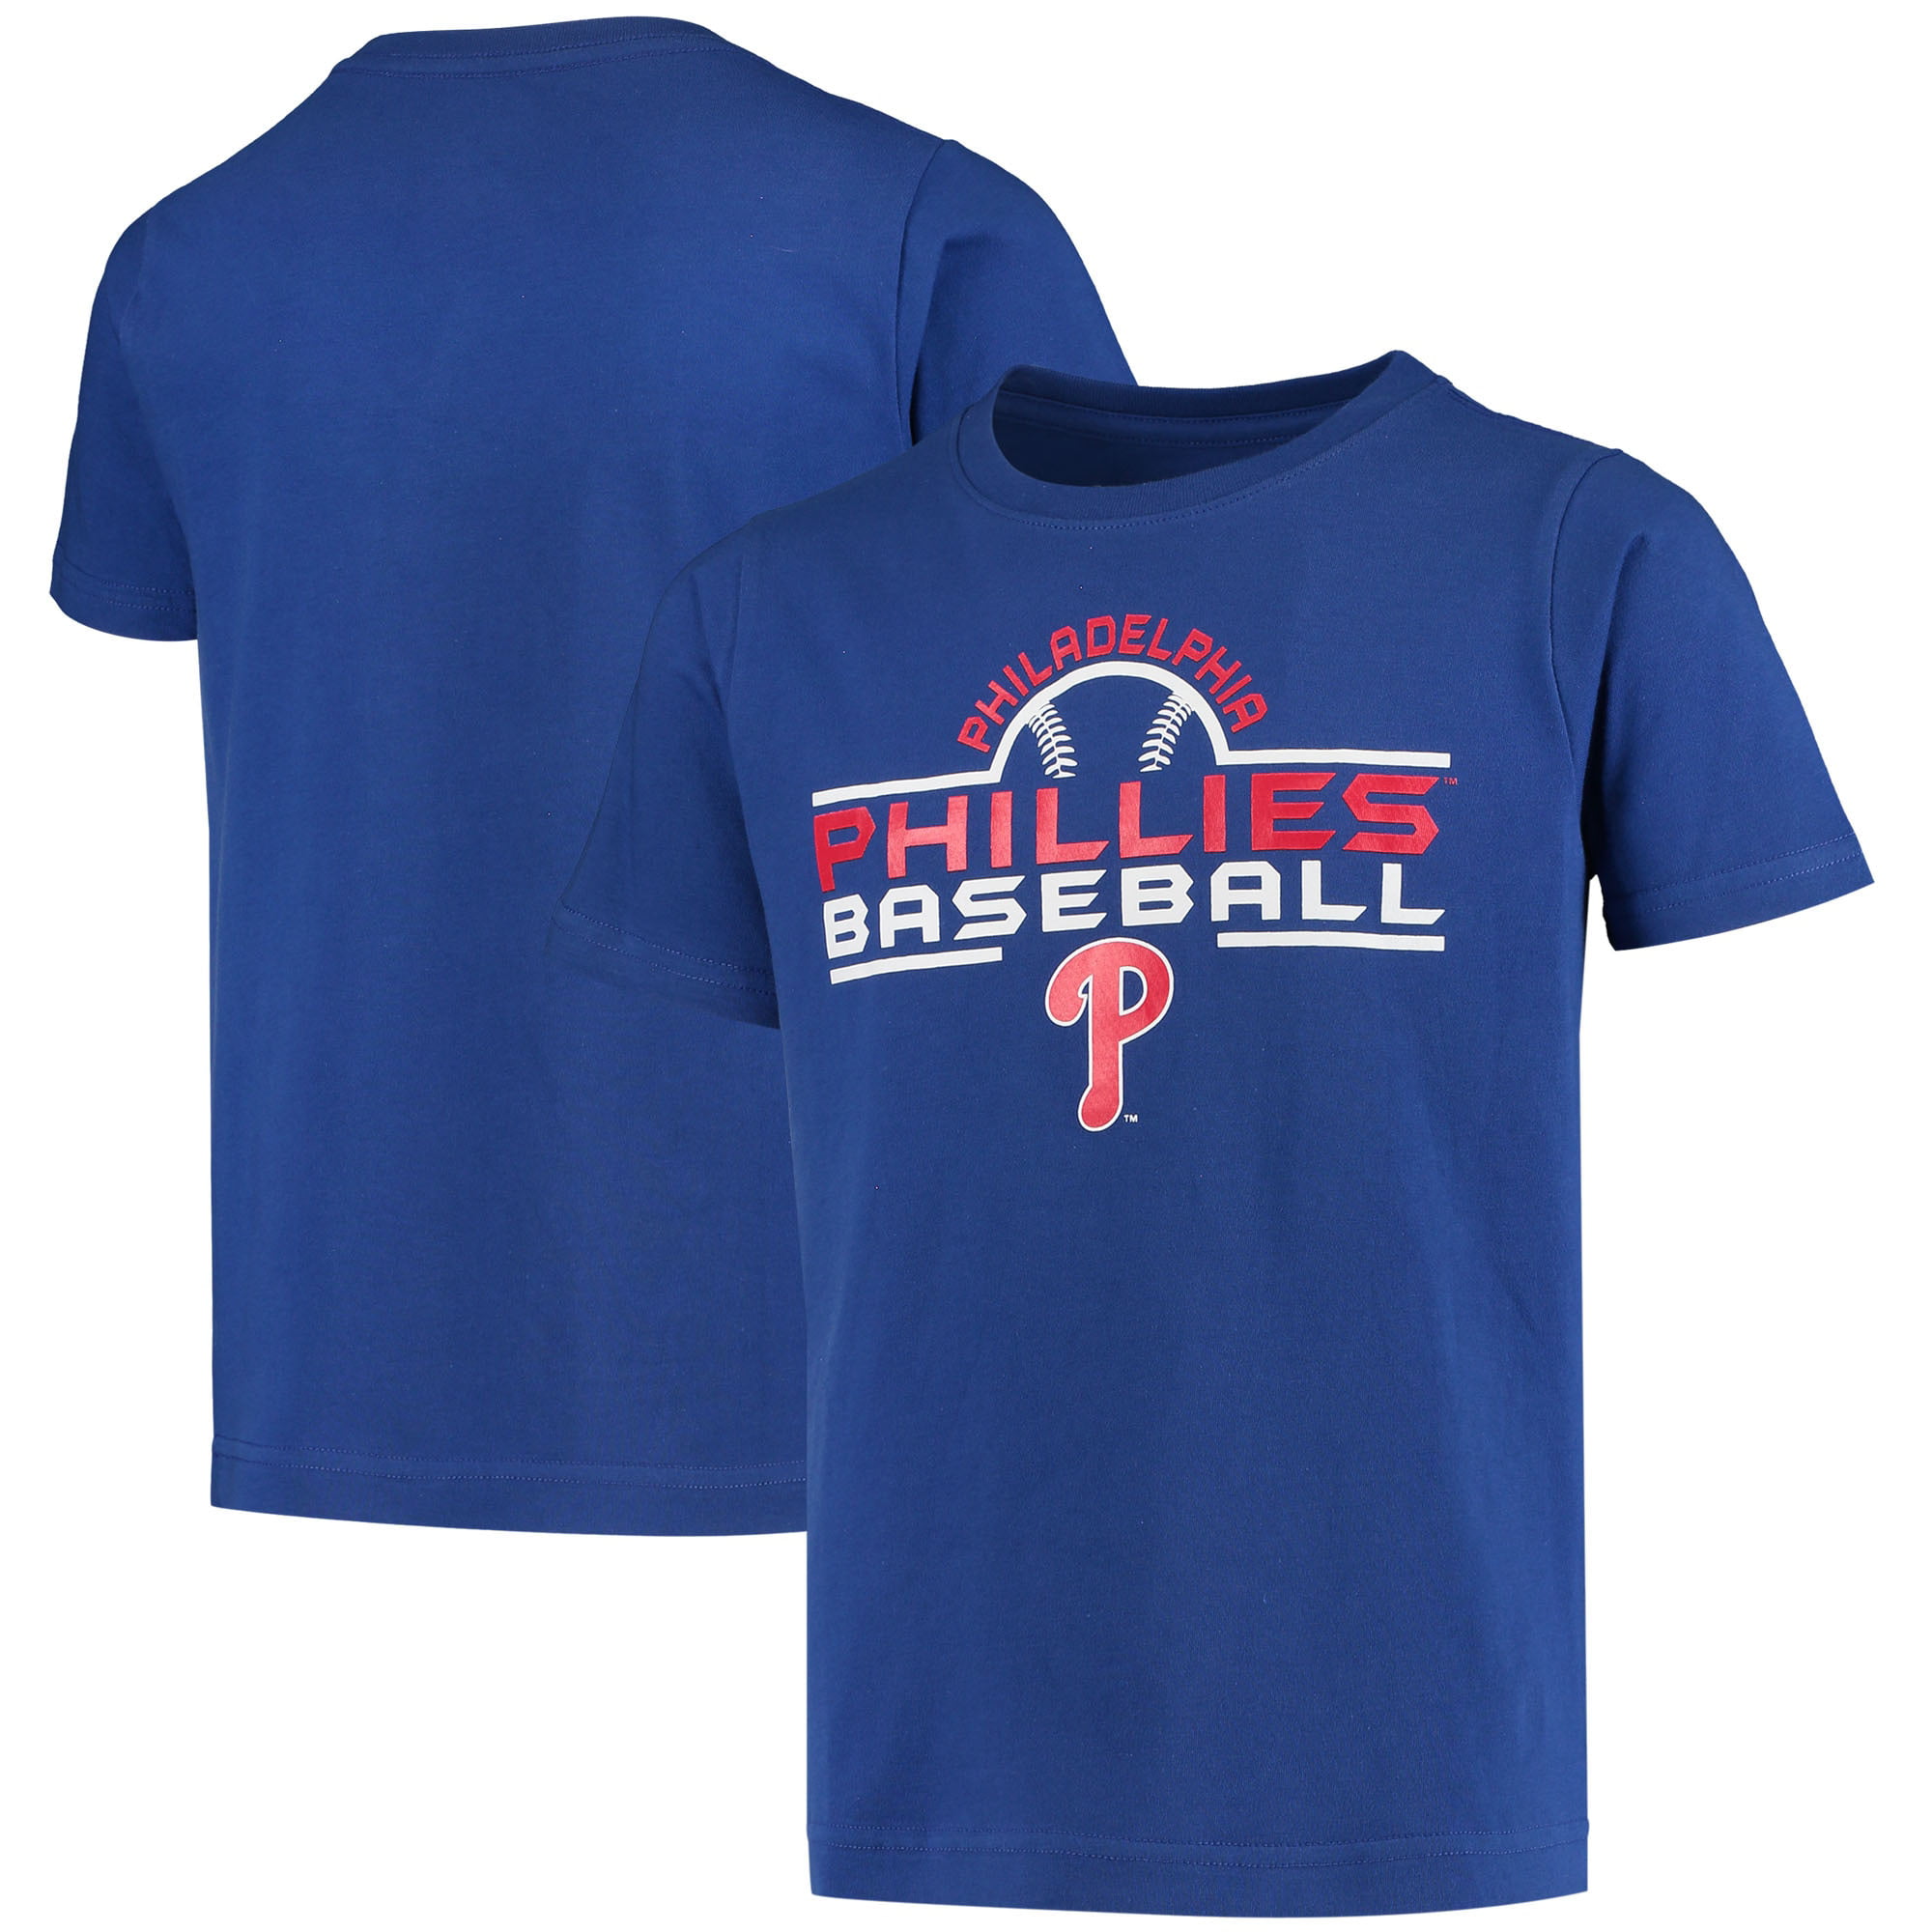 Philadelphia Phillies Slim Baseball Jersey Open Tshirt Sports Tops Cheer Fan Tee 